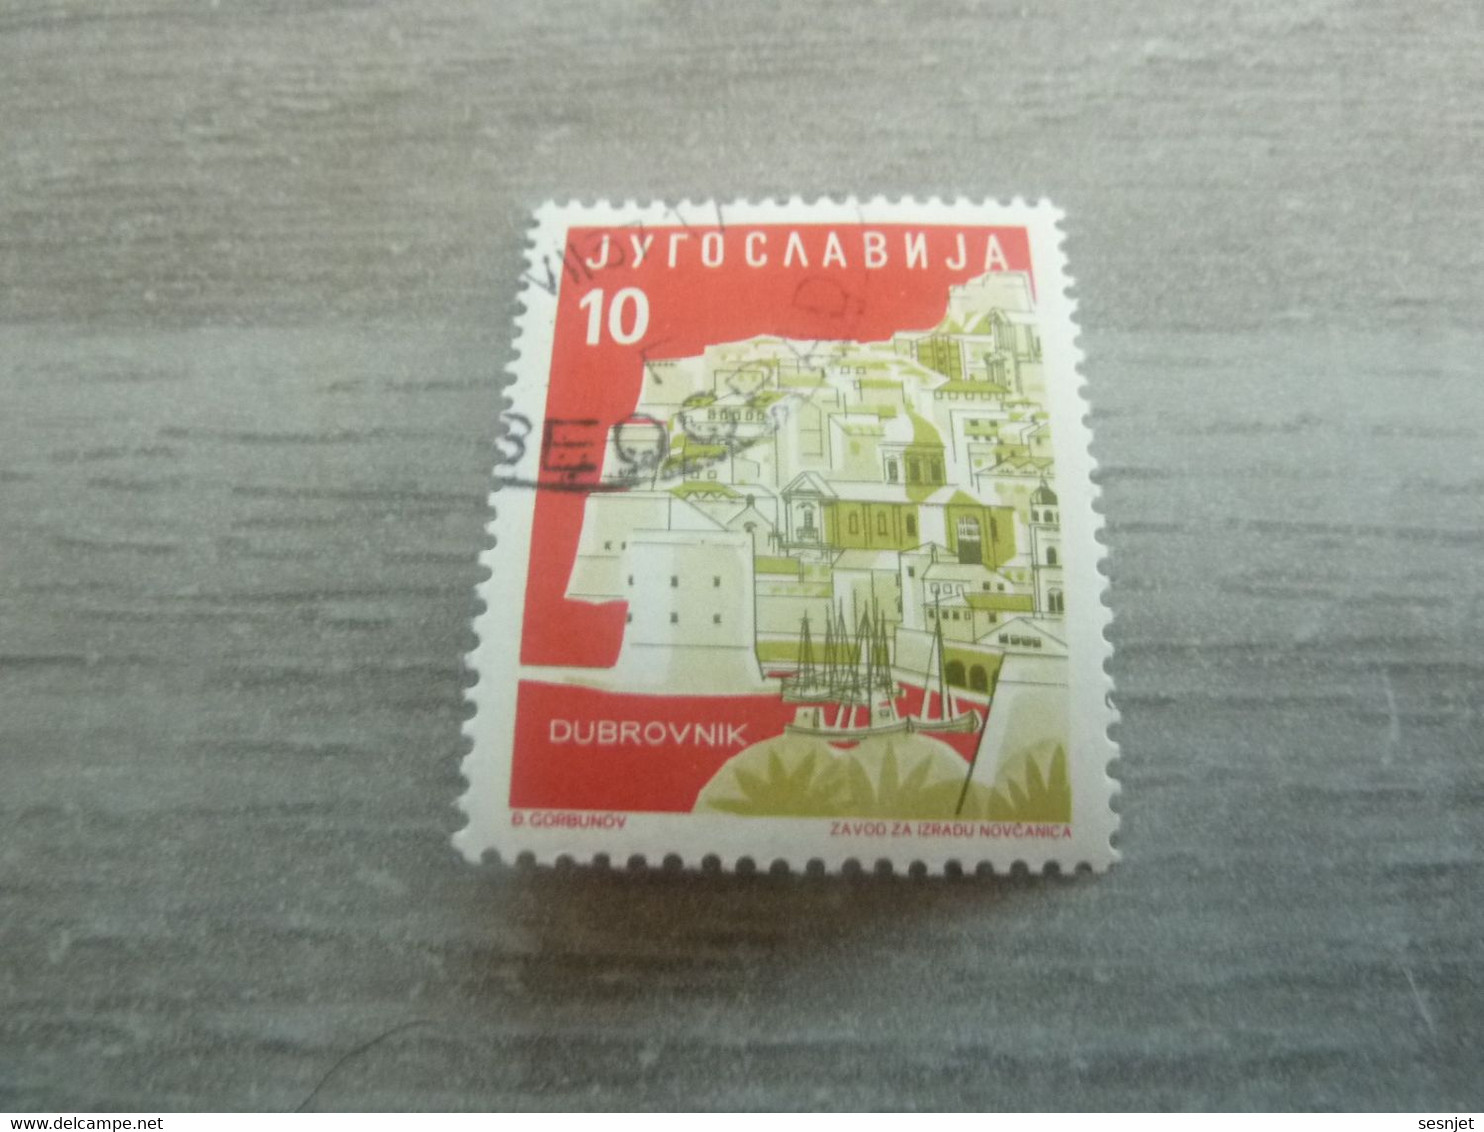 Jyrocaabnja - Dubrovnik - Val 10 - Multicolore - Oblitéré - - Gebraucht